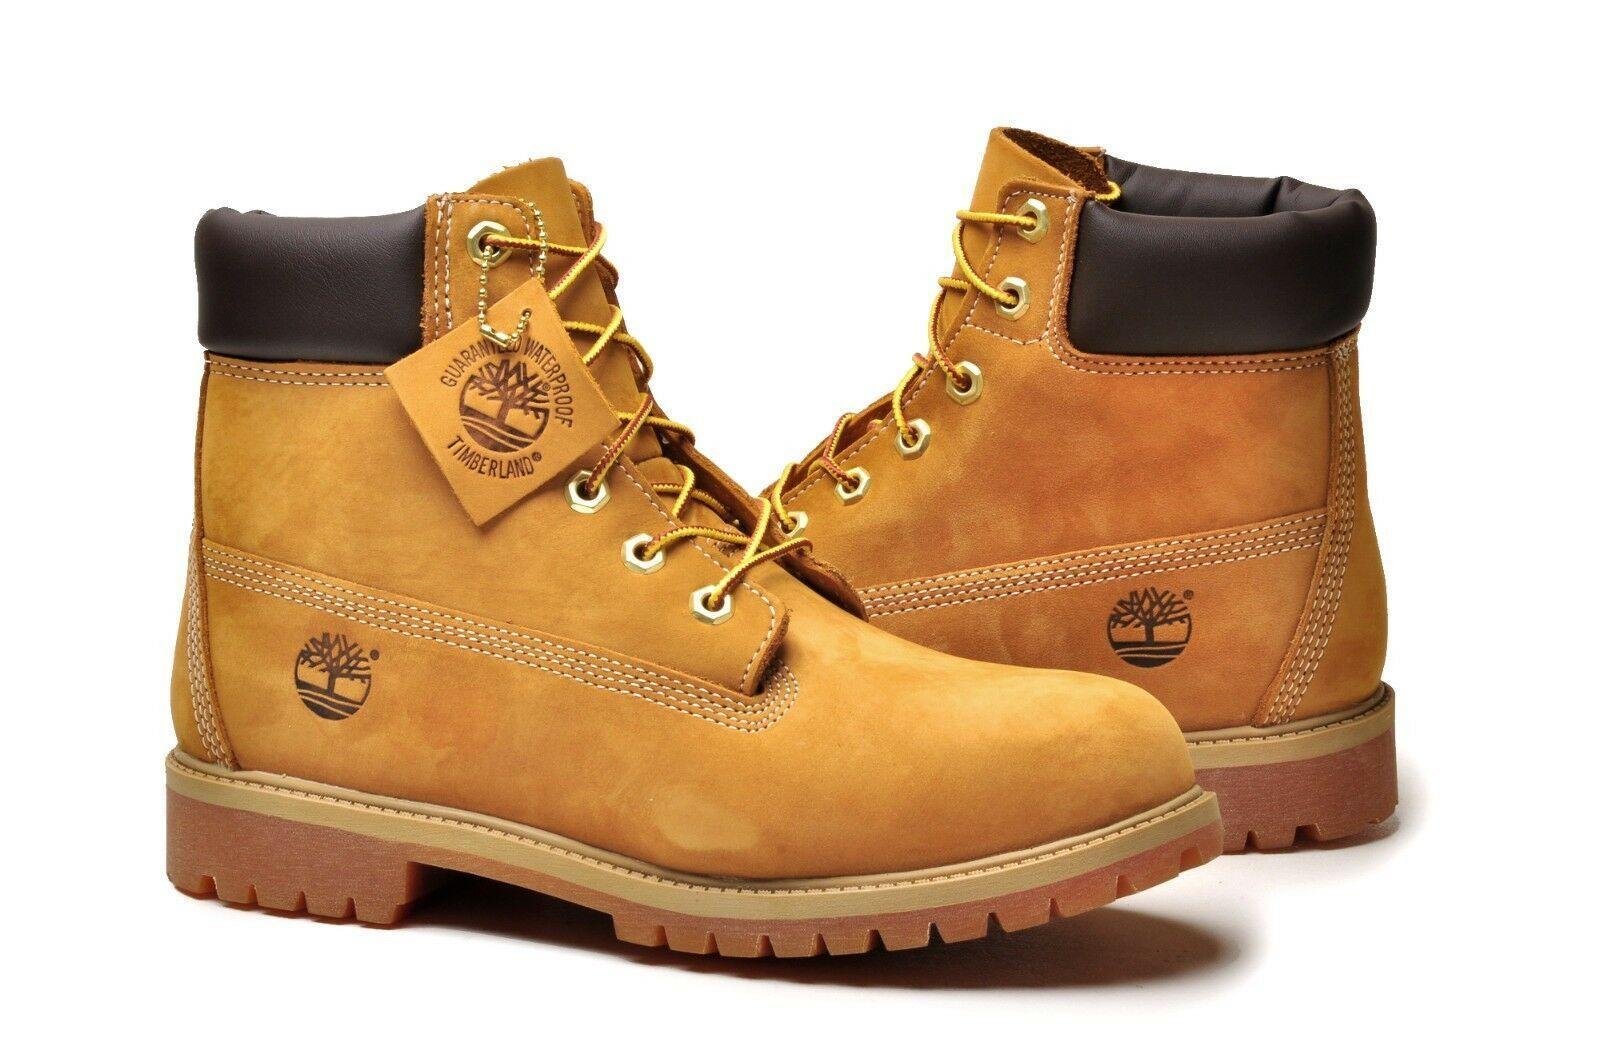 Timberland Womens Premium 6"" Waterproof Leather Boots Shoes - Wheat Nubuck - US 6.5